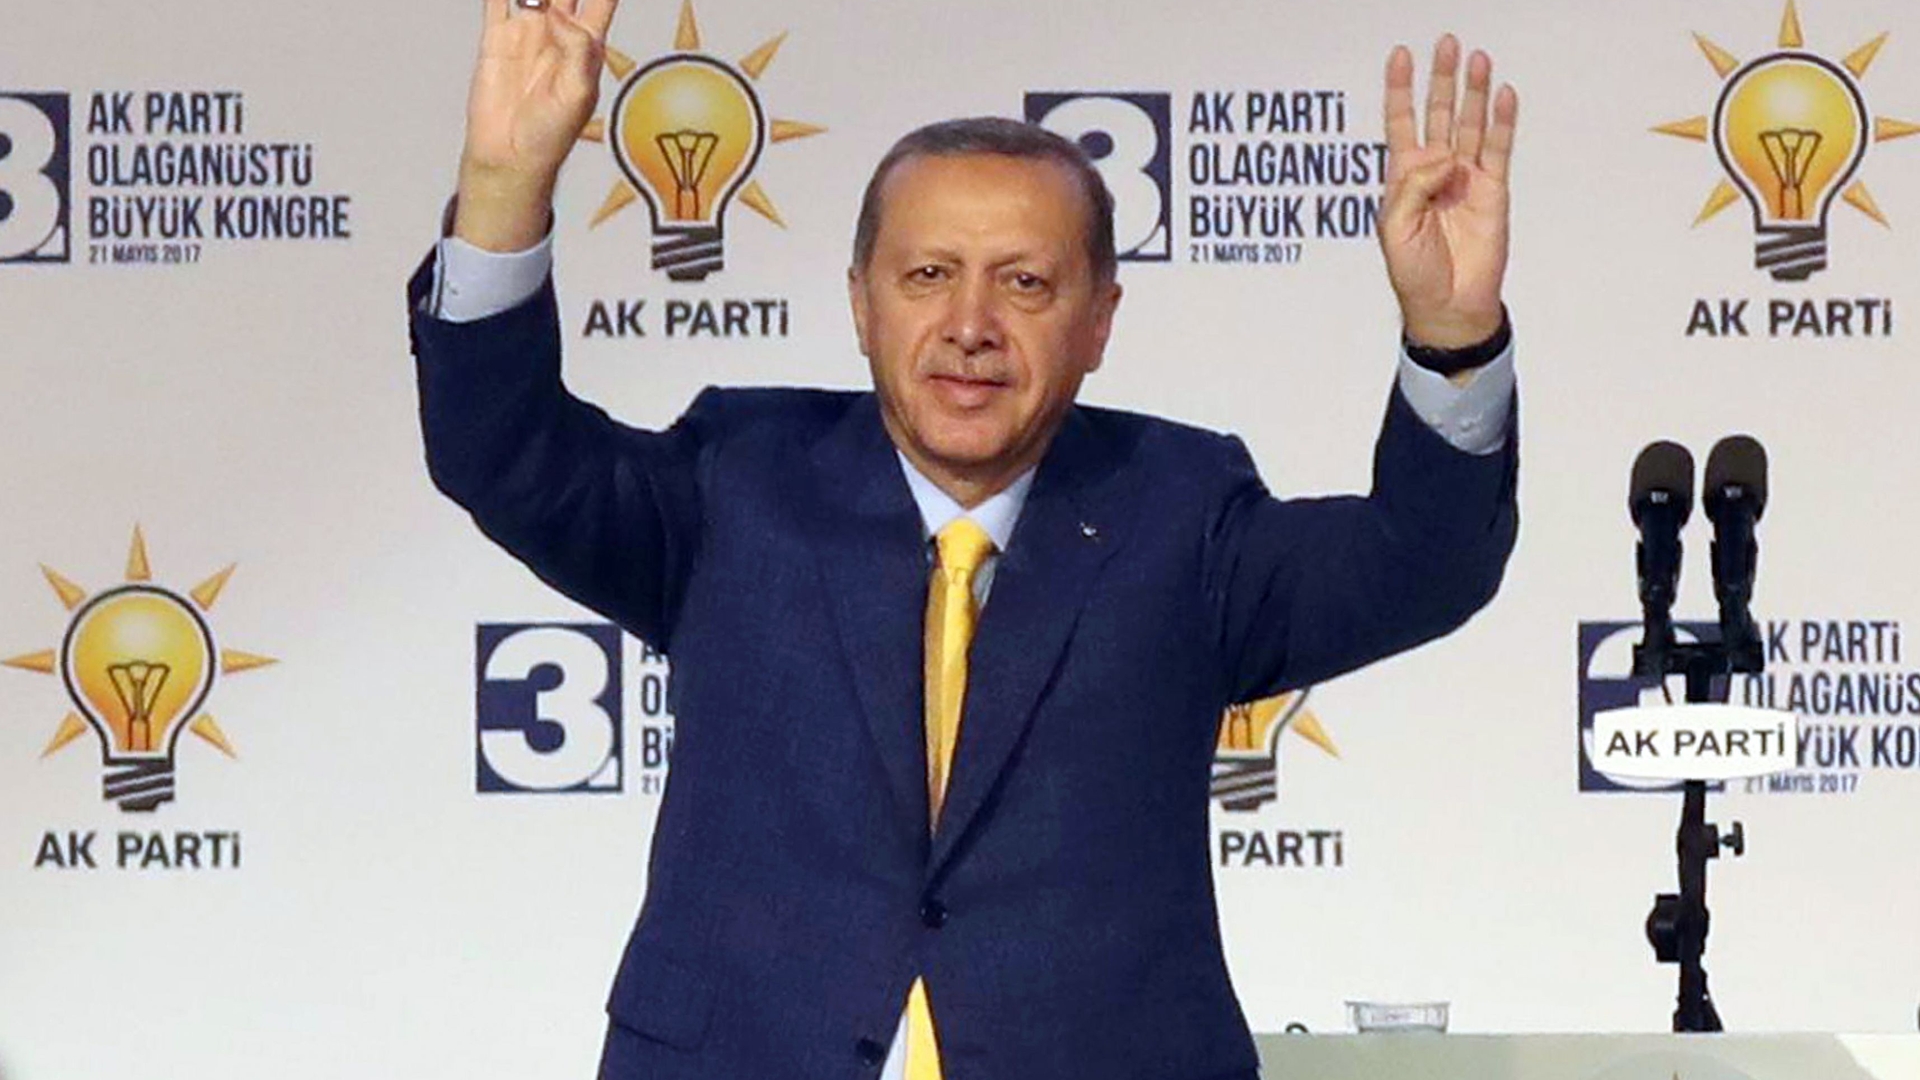 TURKEY-POLITICS-GOVERNMENT-AKP